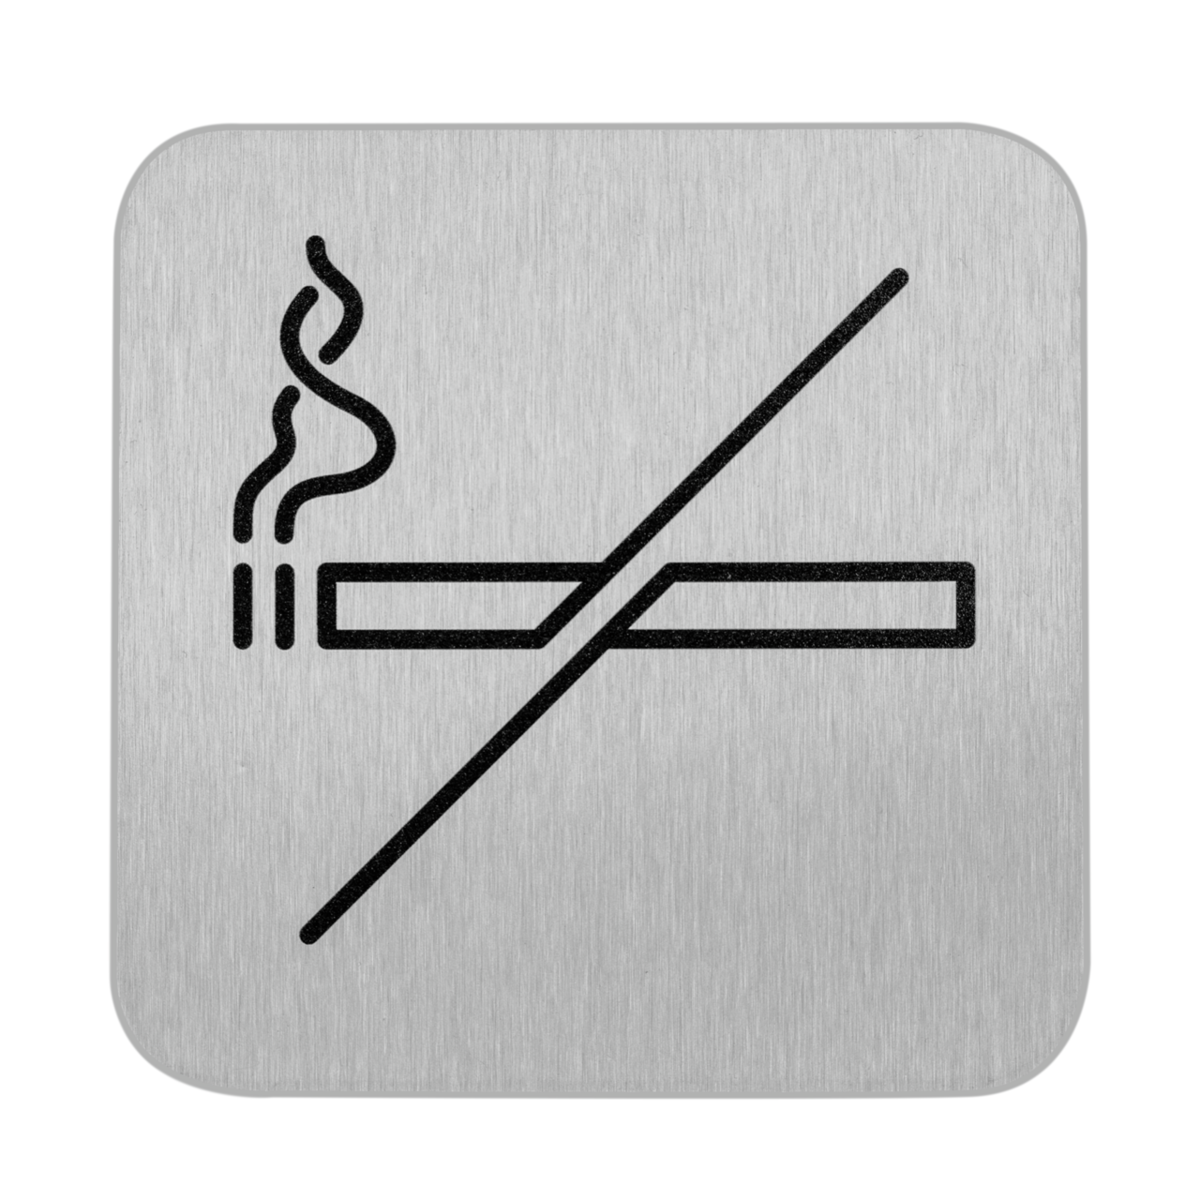 Piktogramm E ST Rauchverbot